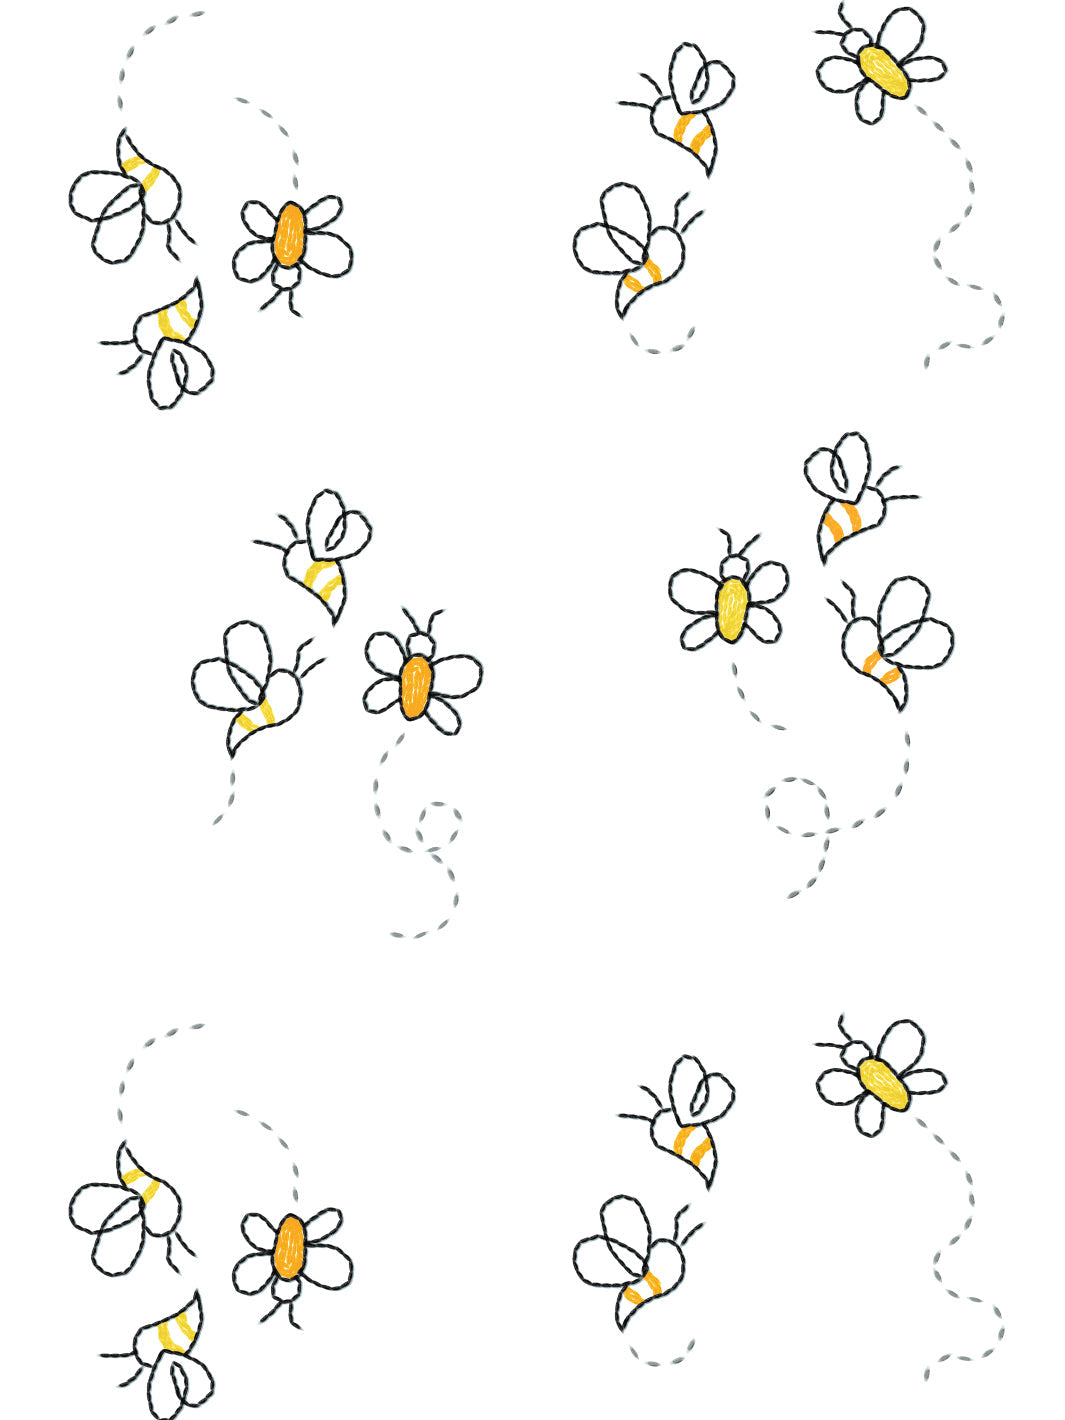 'Bzzz' Wallpaper by Lingua Franca - Yellow